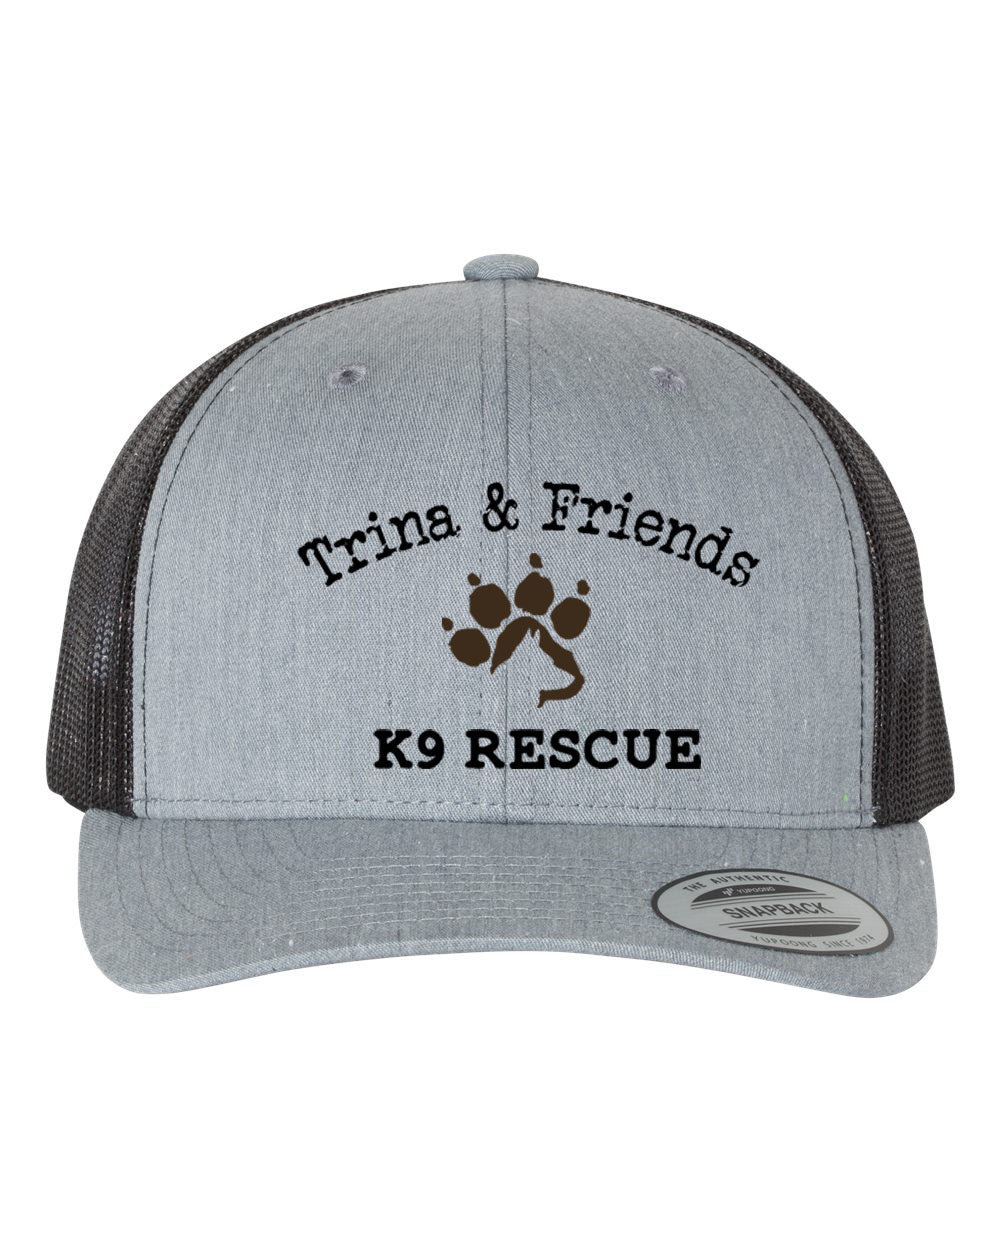 Trina & Friends Design 6 Trucker Hat